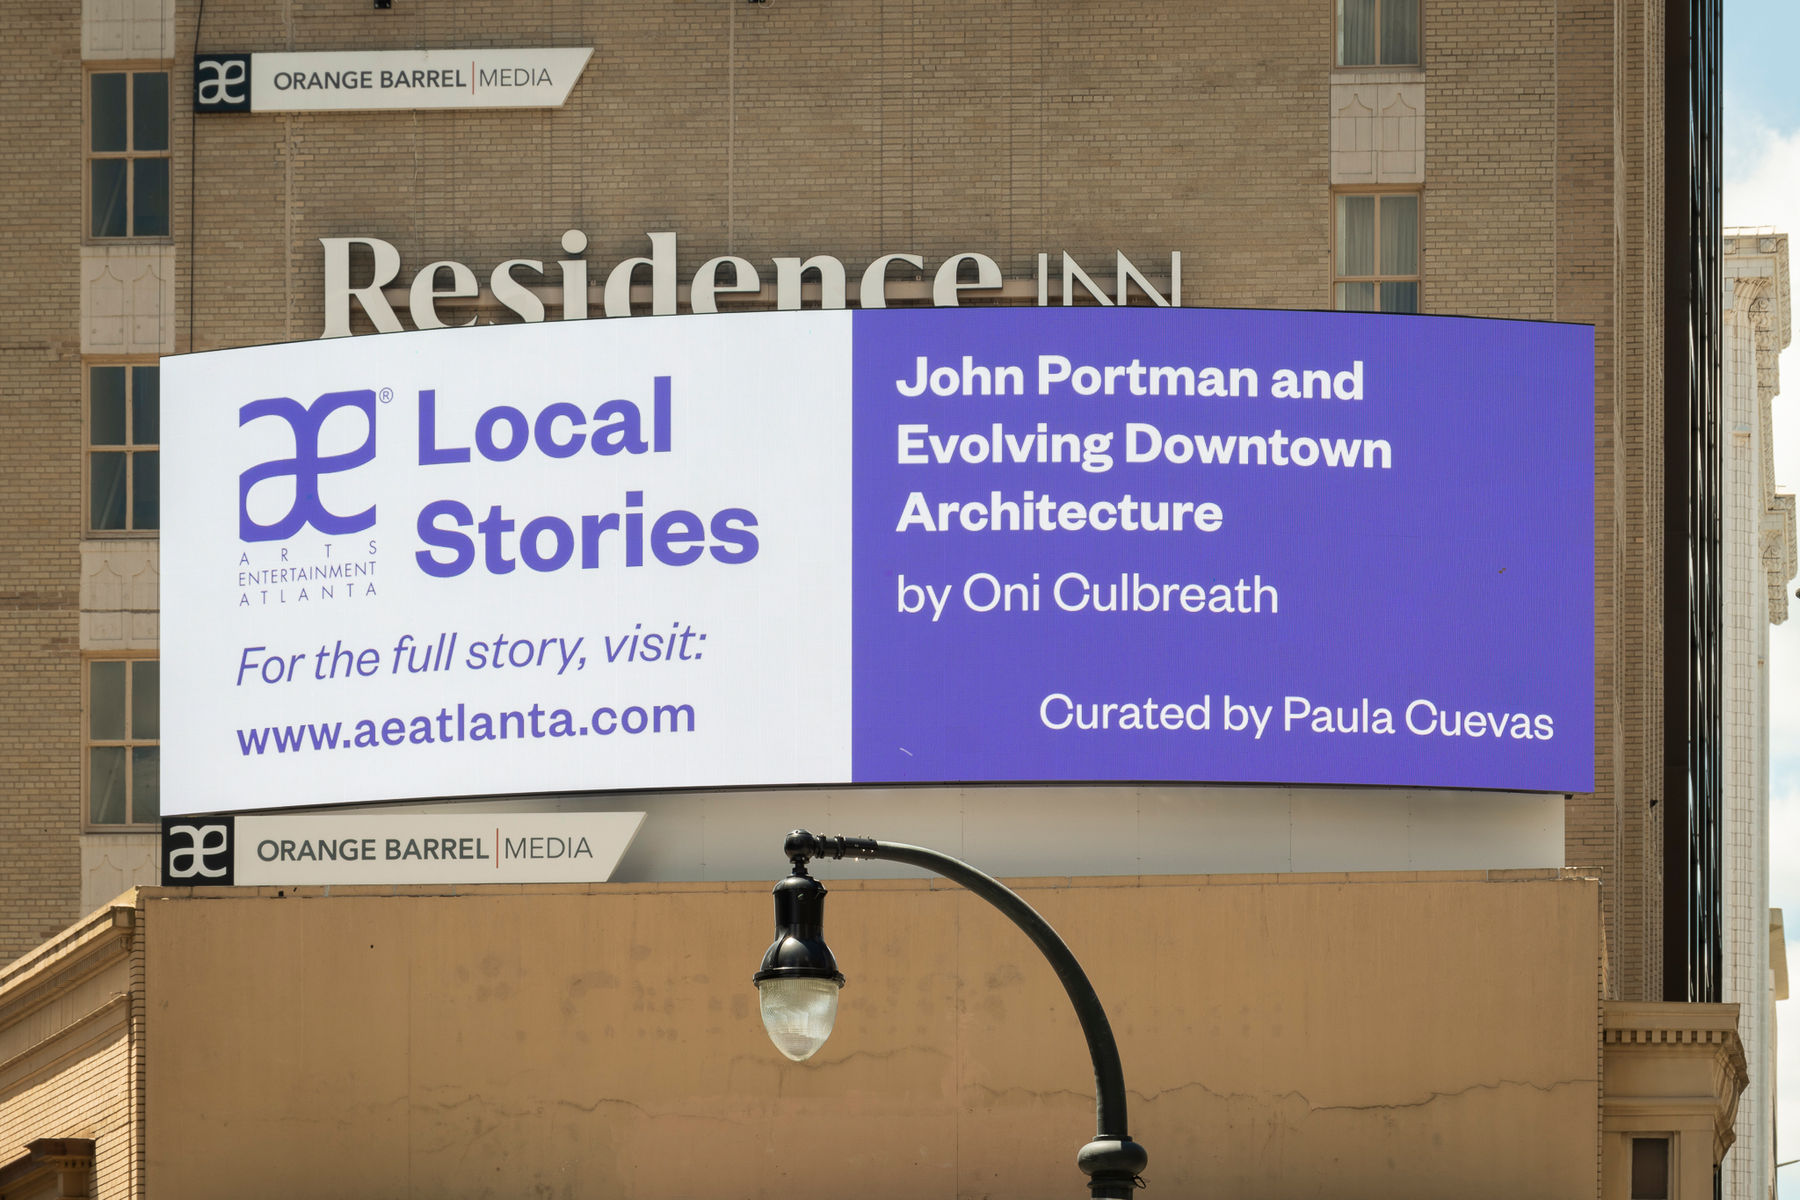 John Portman and Evolving Downtown Architecture